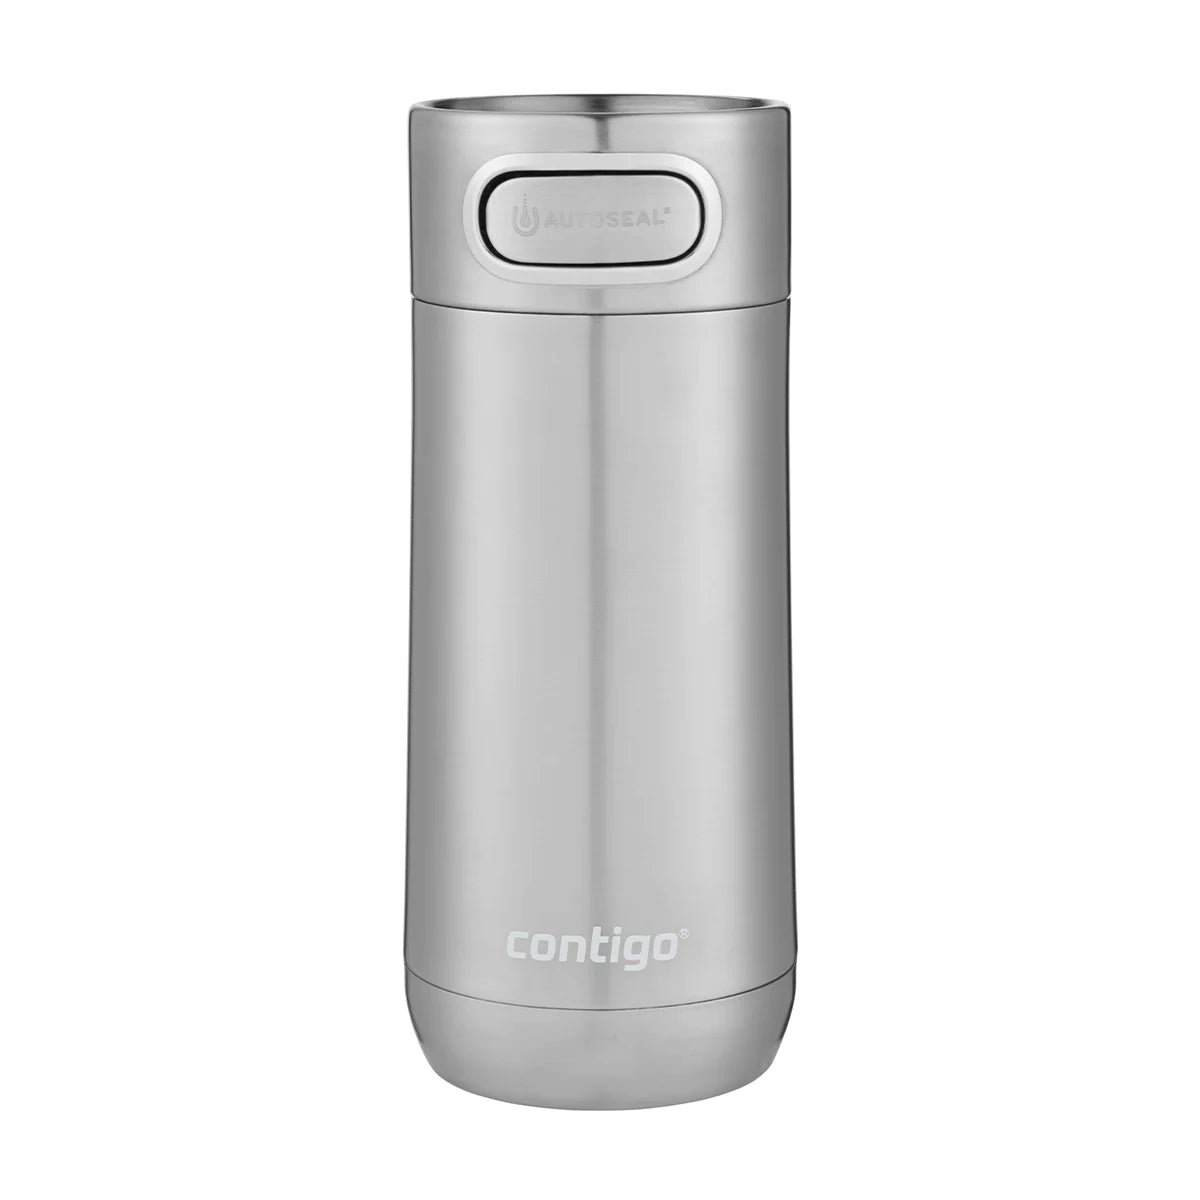 Contigo Autoseal Luxe Vacuum Insulated Stainless Steel Travel Mug 360 ml